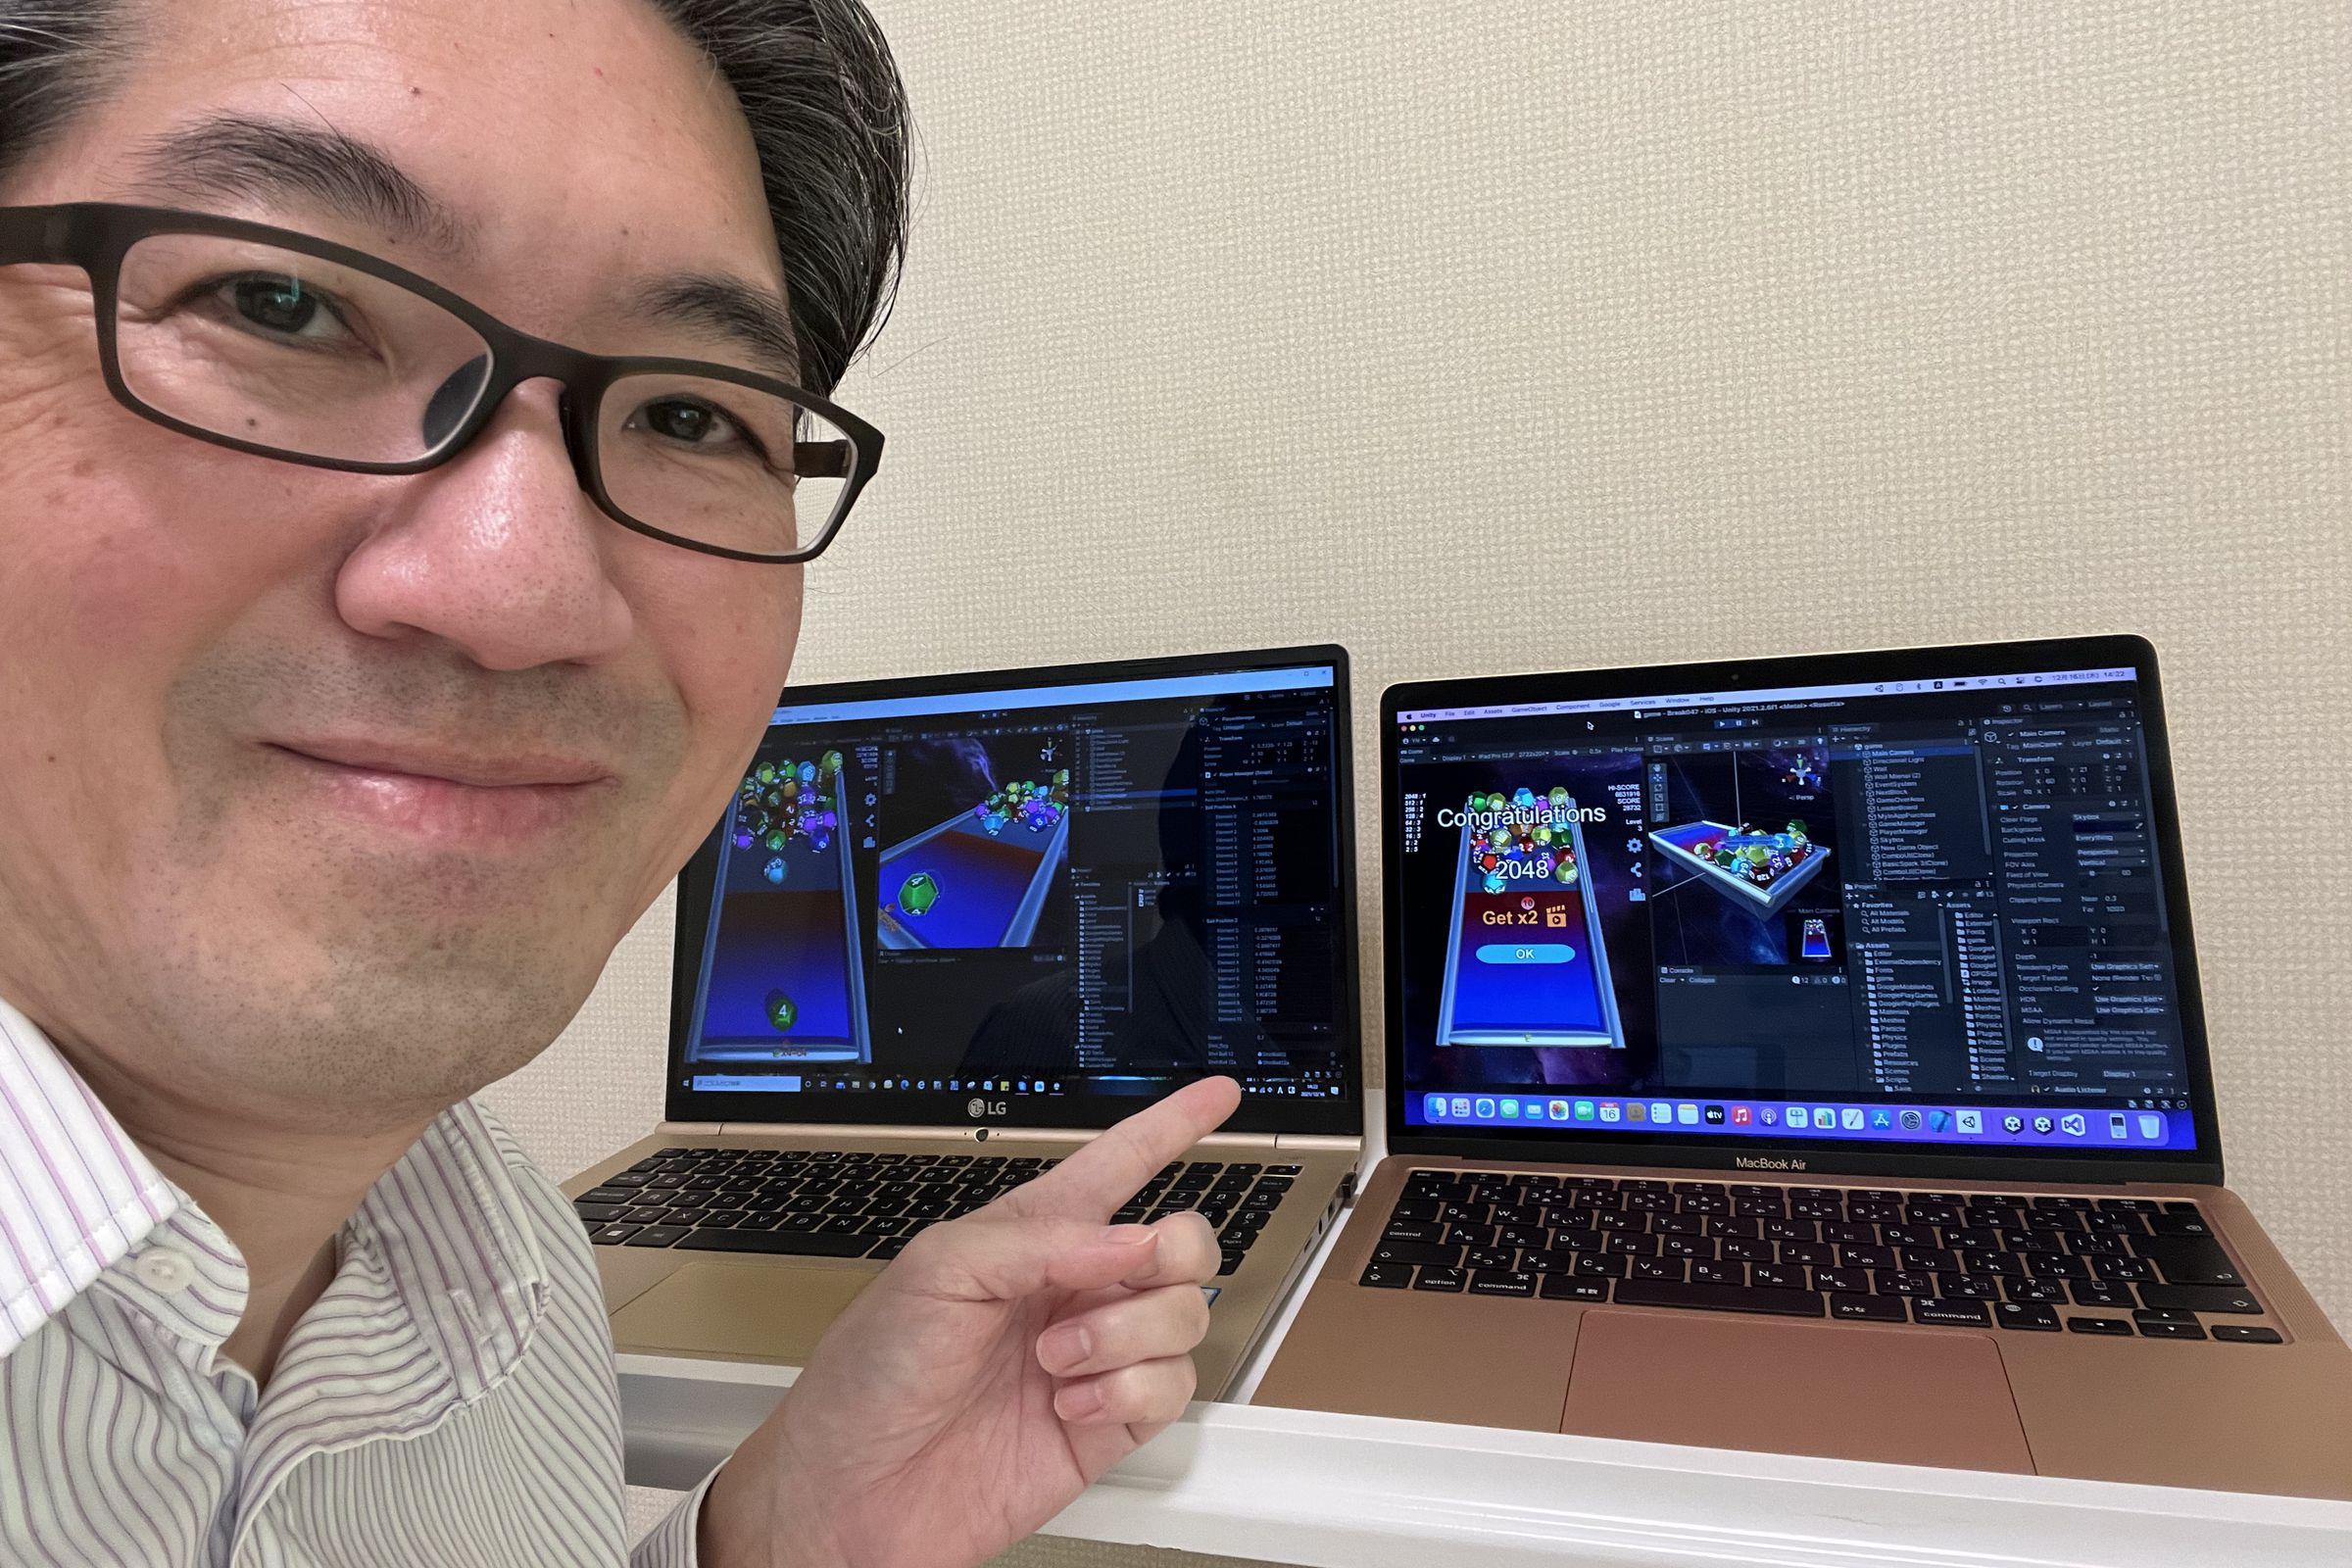 Yuji Naka showing off his solo-developer skills